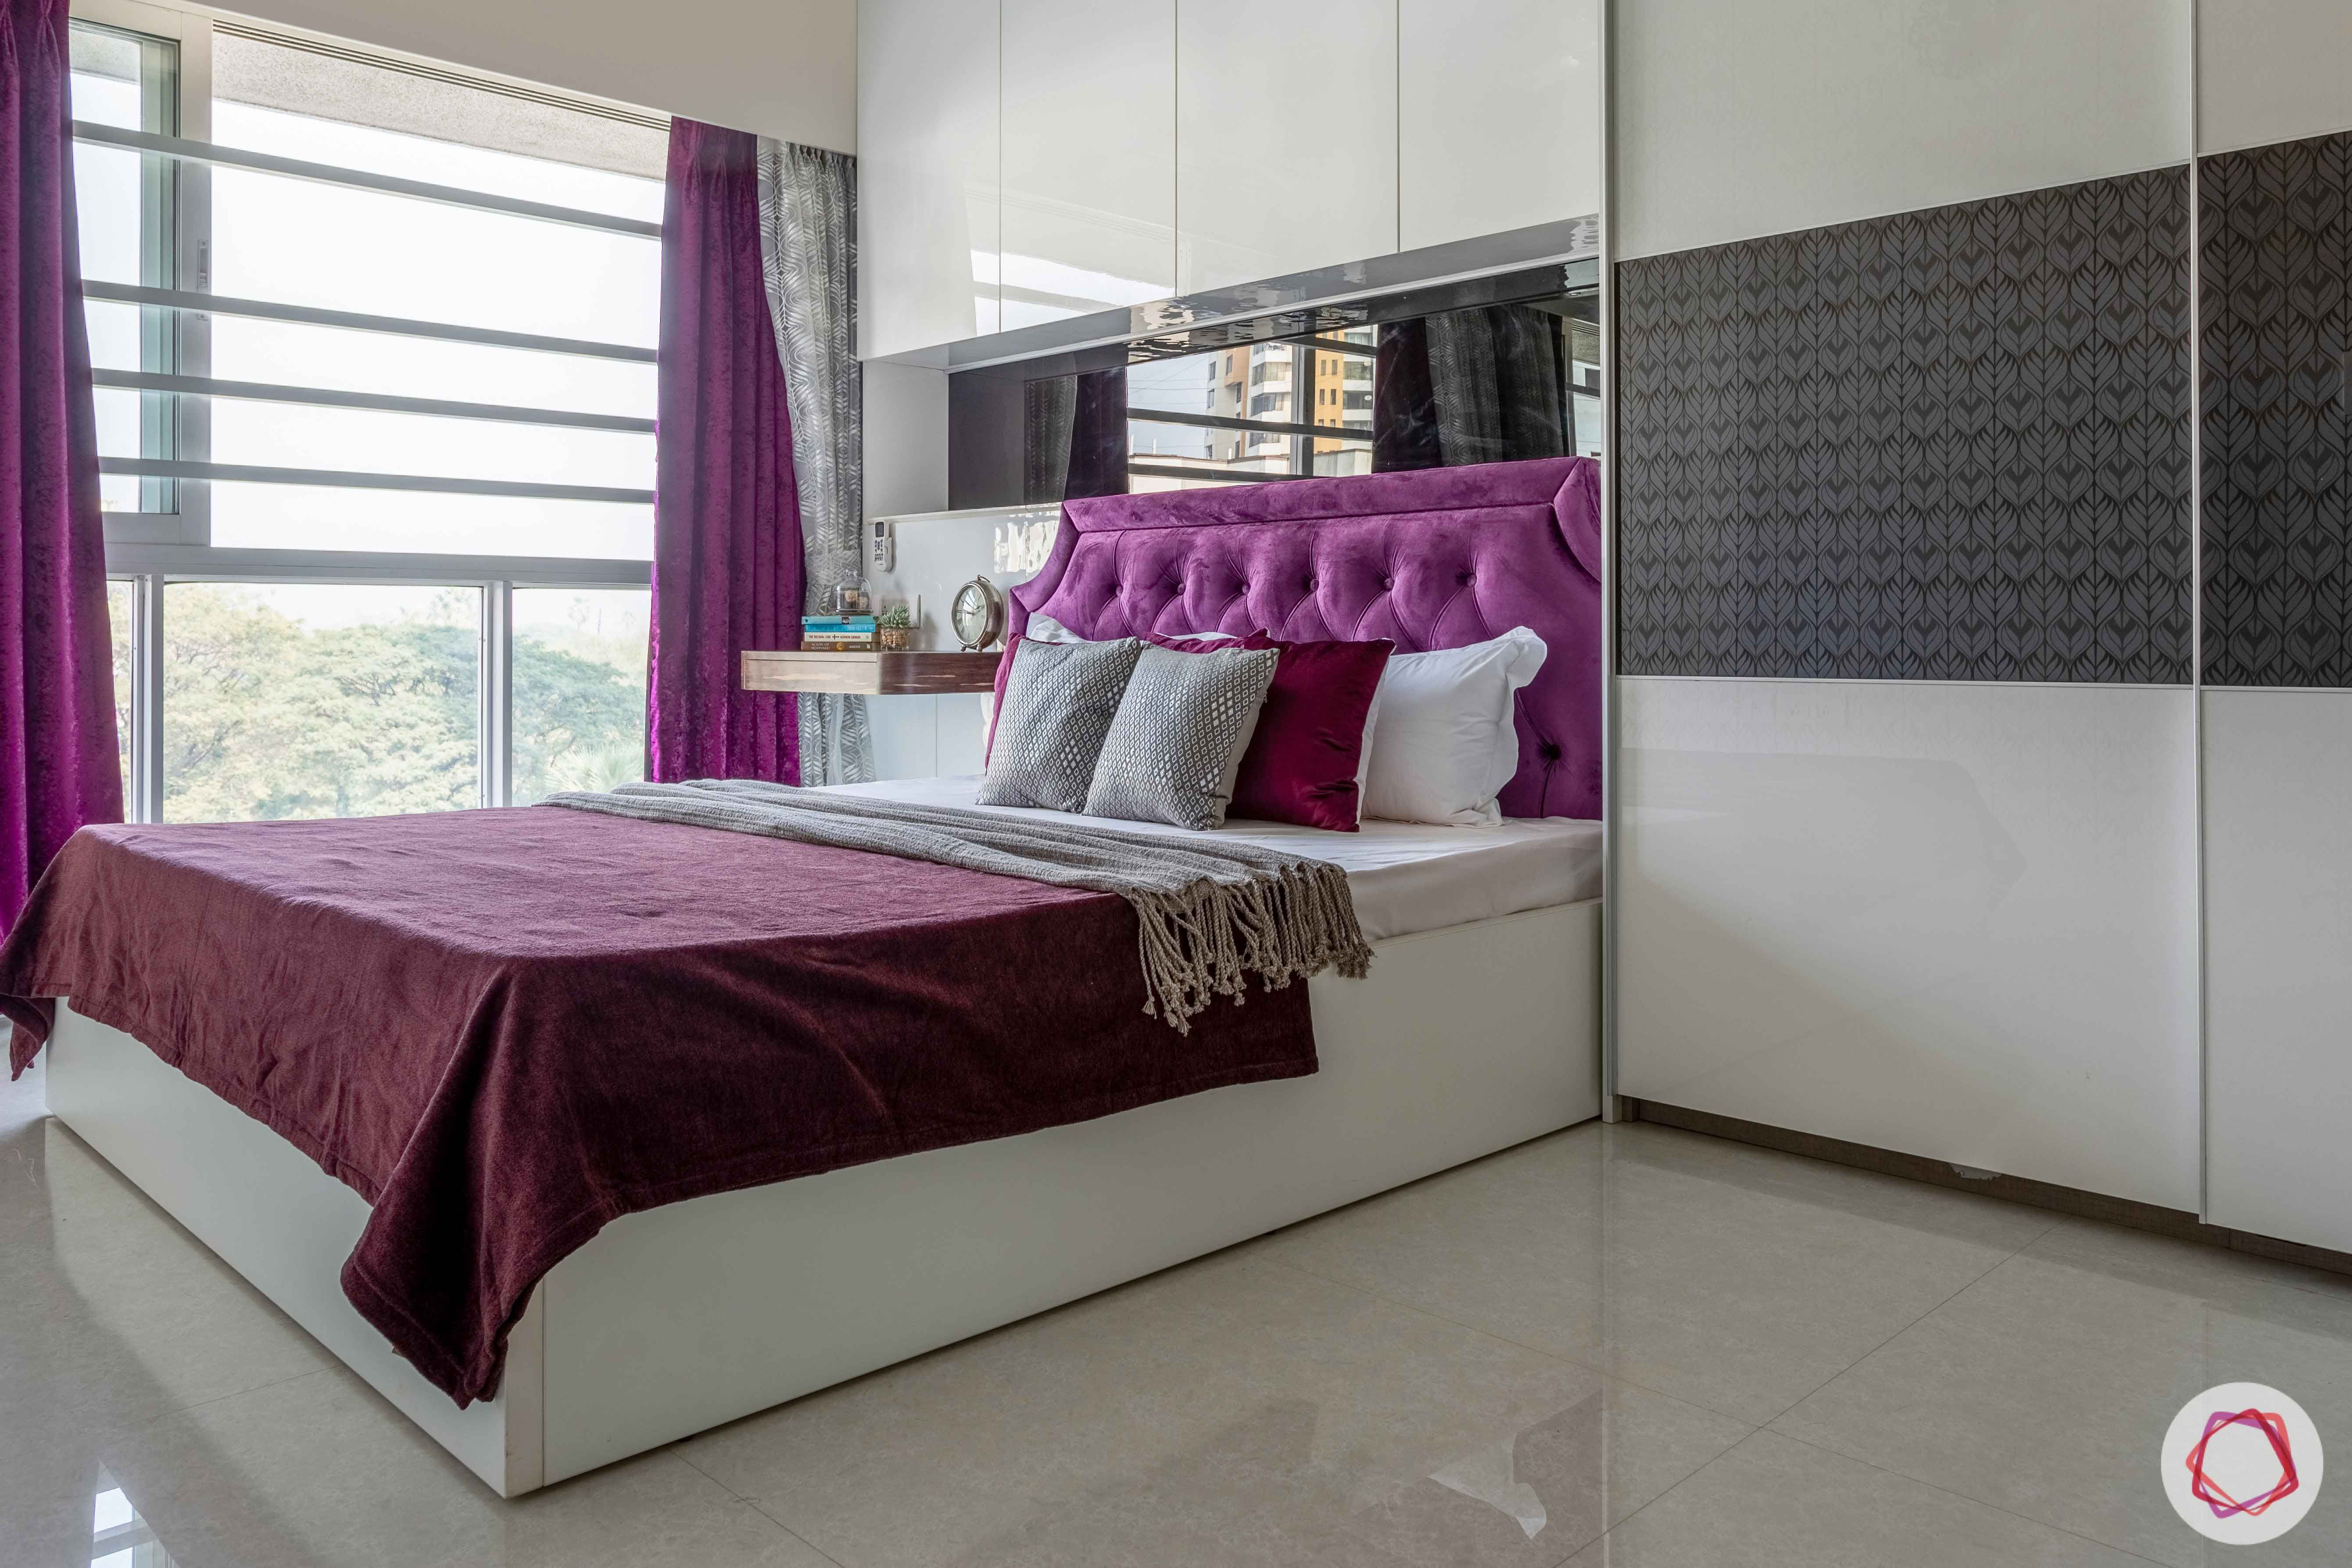 2 bhk flat interior-master bedroom-sliding wardrobe-white bed